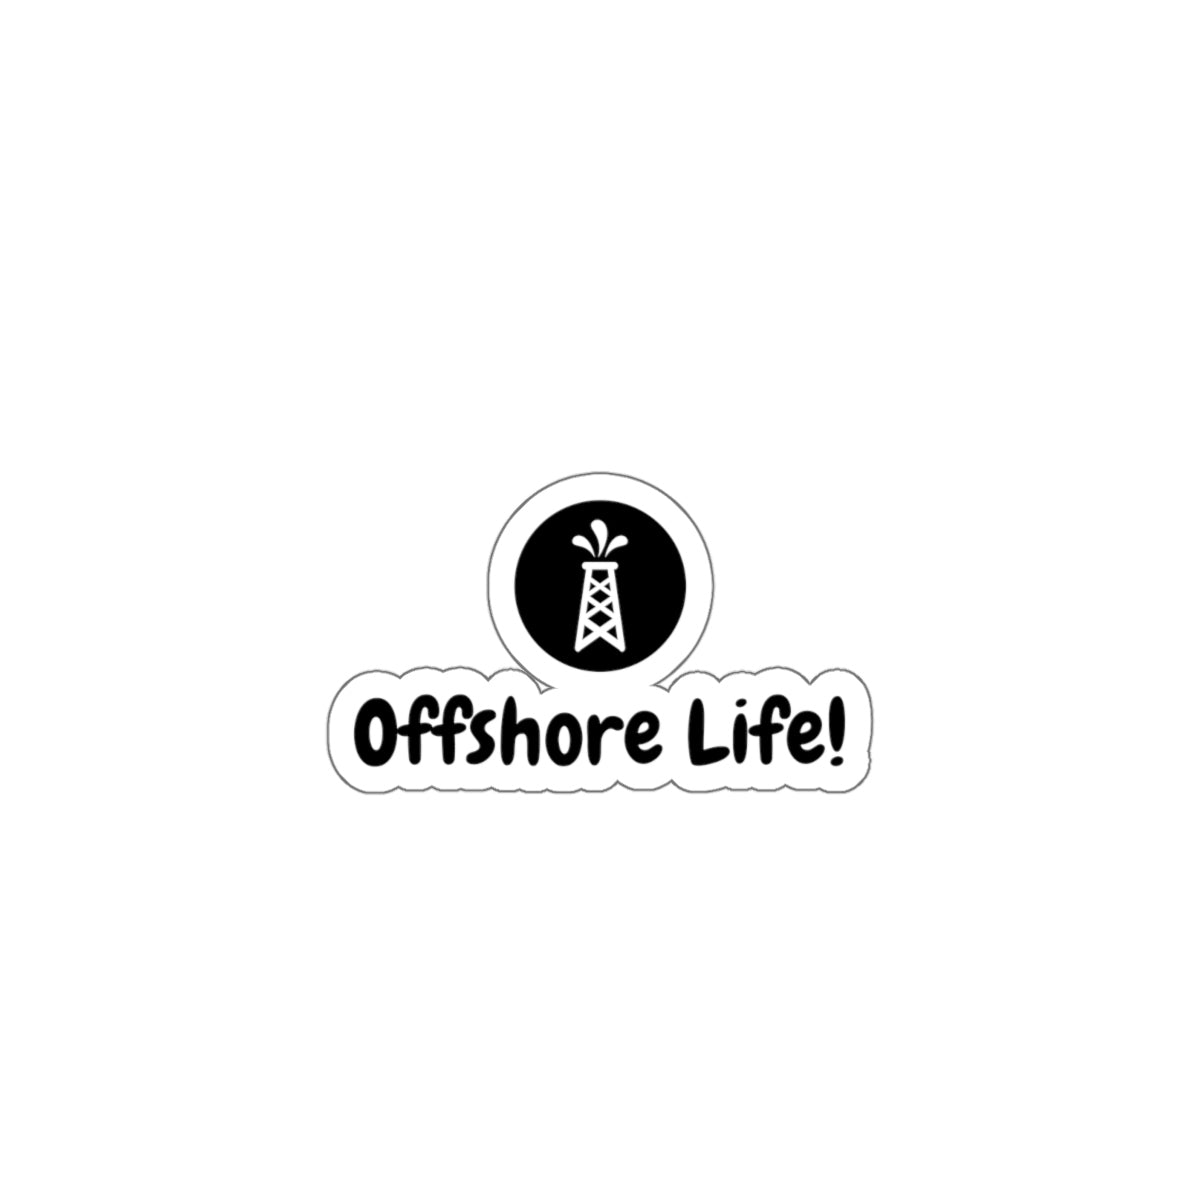 Offshore Life Sticker